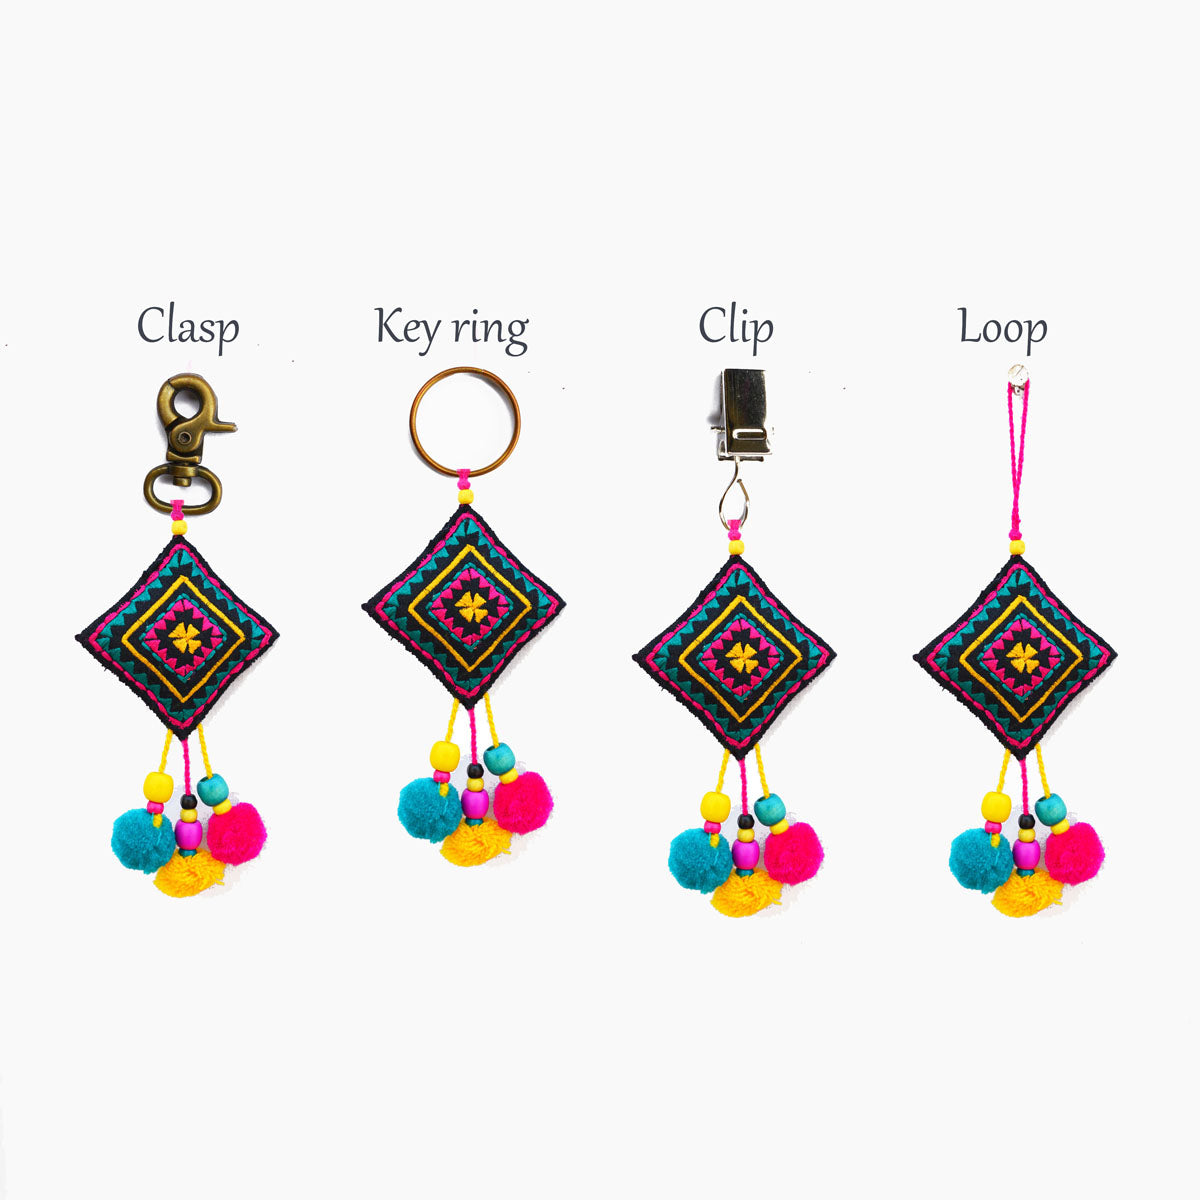 Multicolor fish key ring, tassel, handmade, boho bag charm, size 3 inches or 13 cms